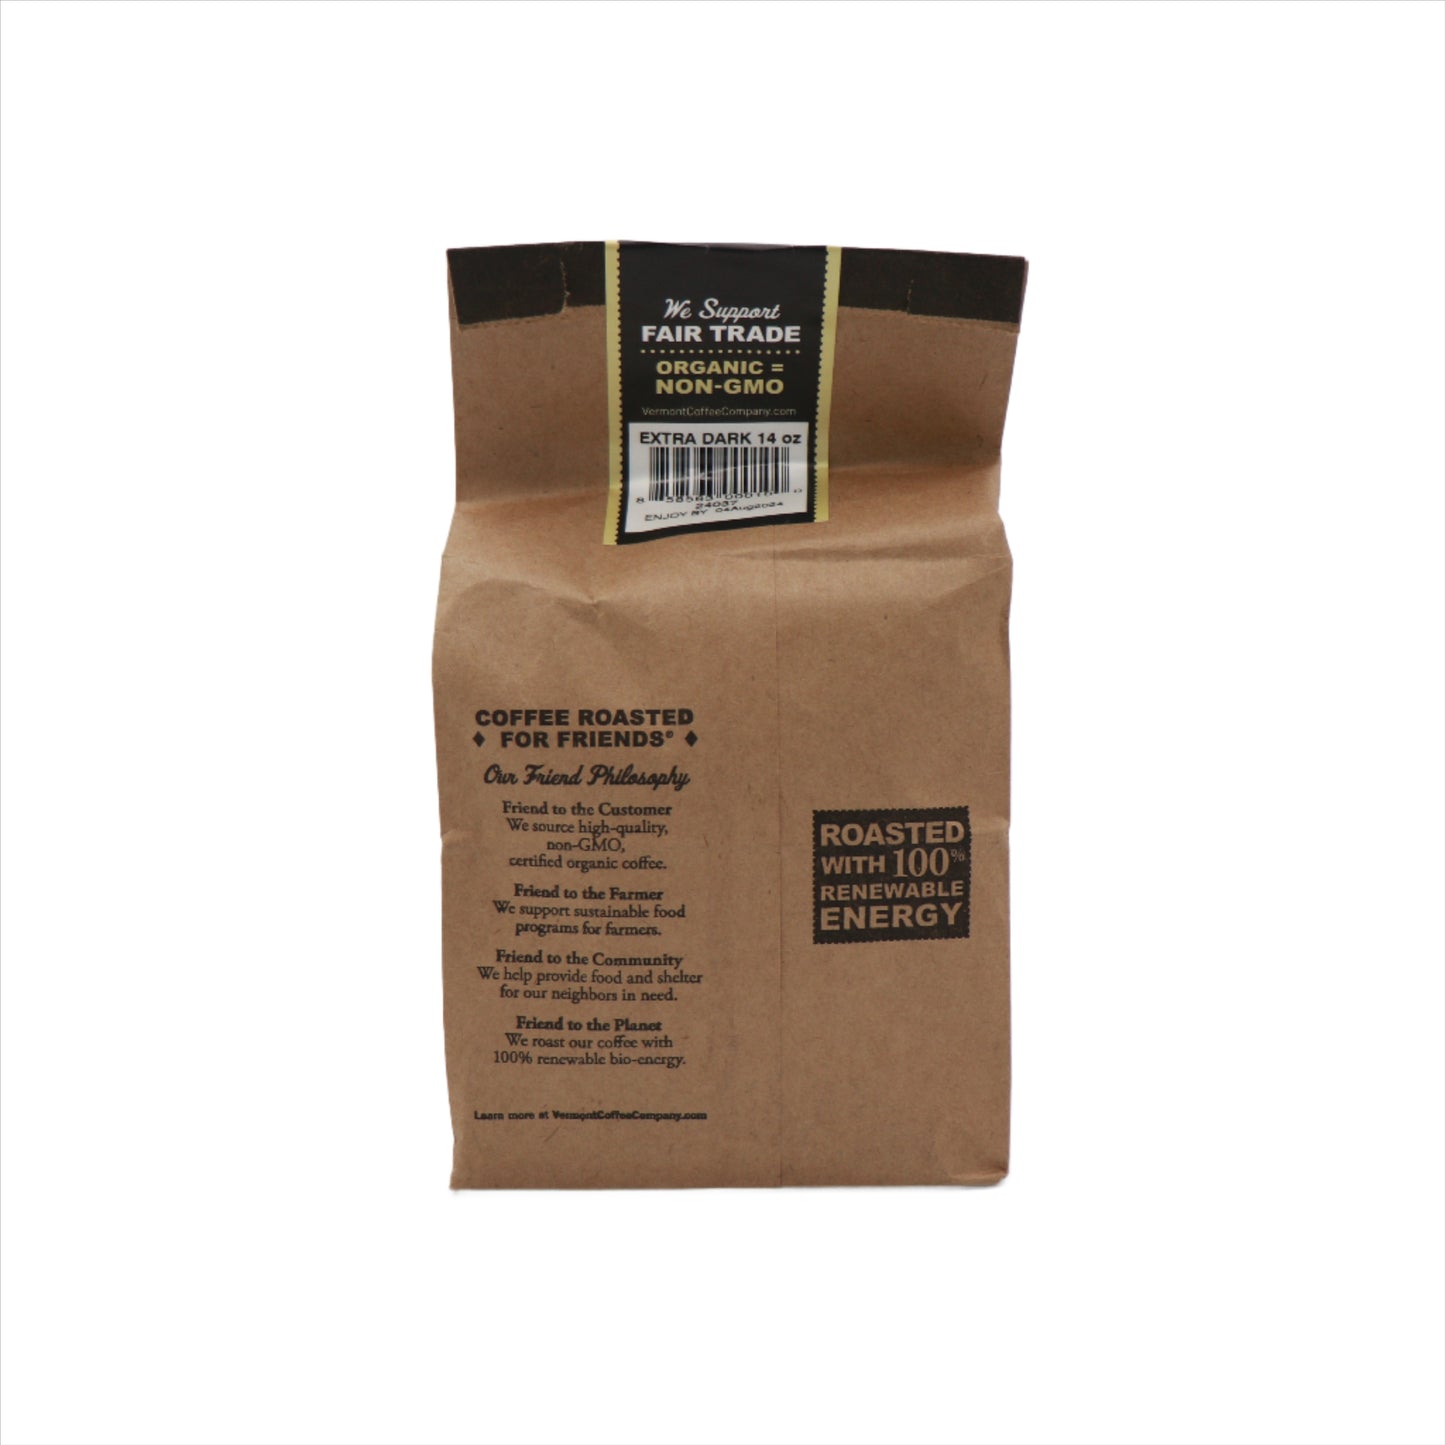 VT Coffee Co. Organic Extra Dark 14oz. Bag